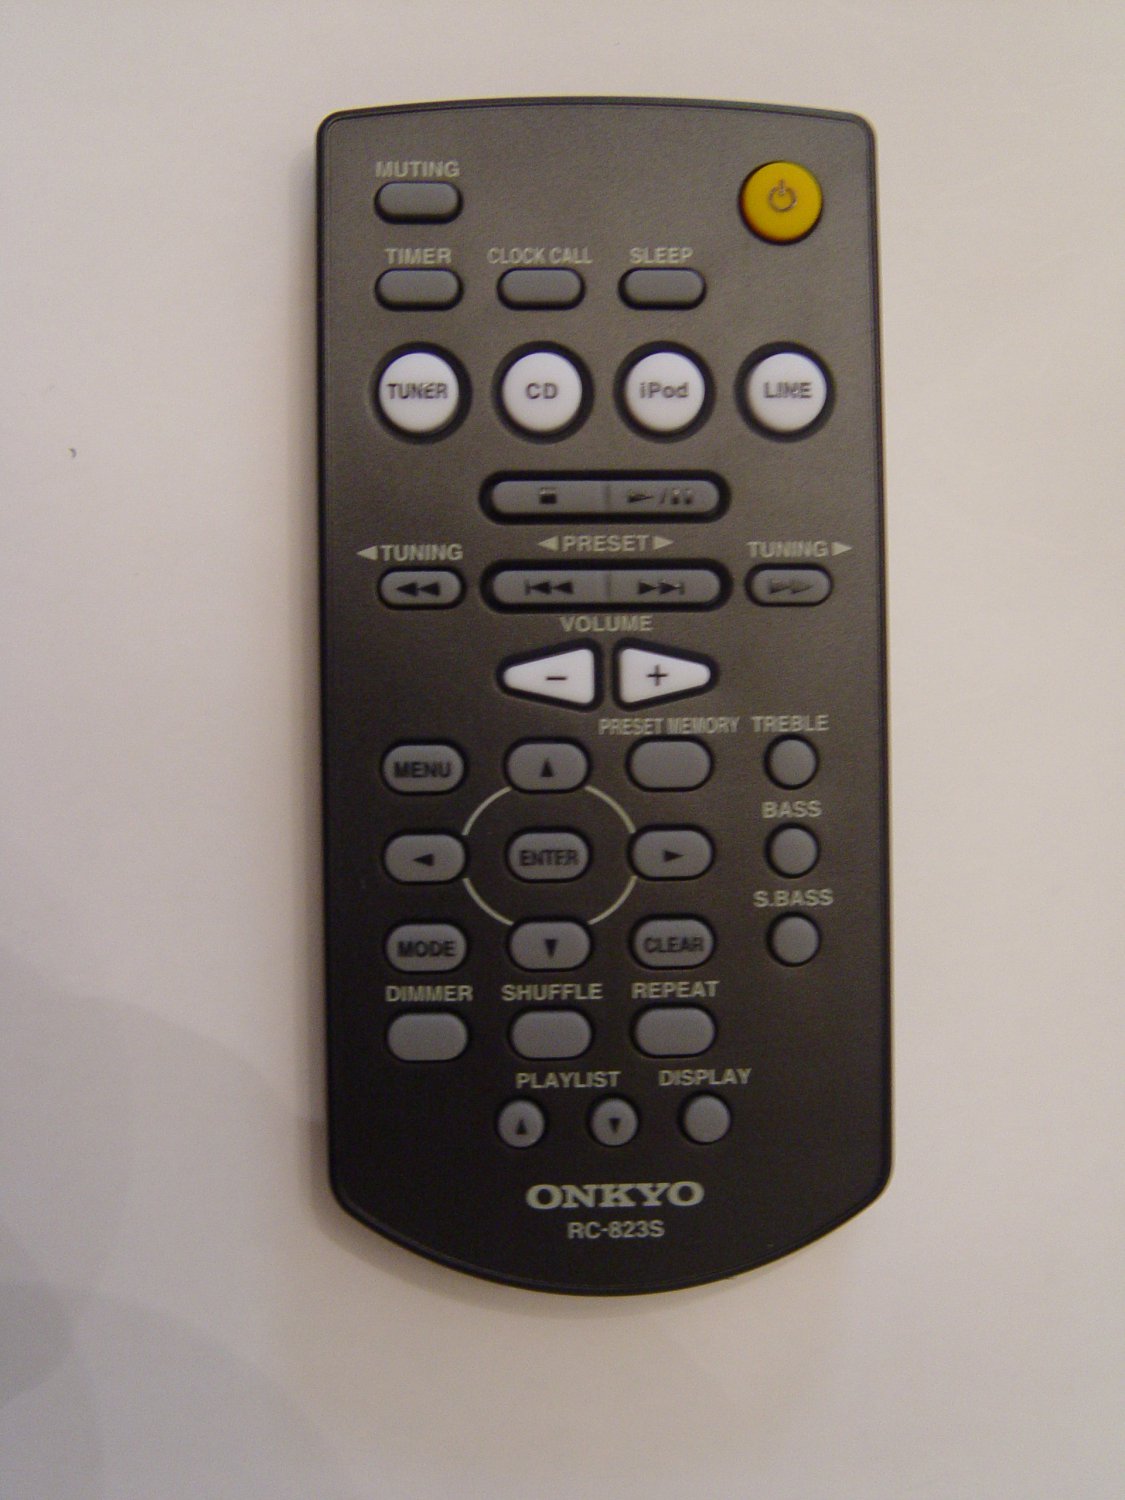 Onkyo RC-823S Remote Control Part # 076D0TD041